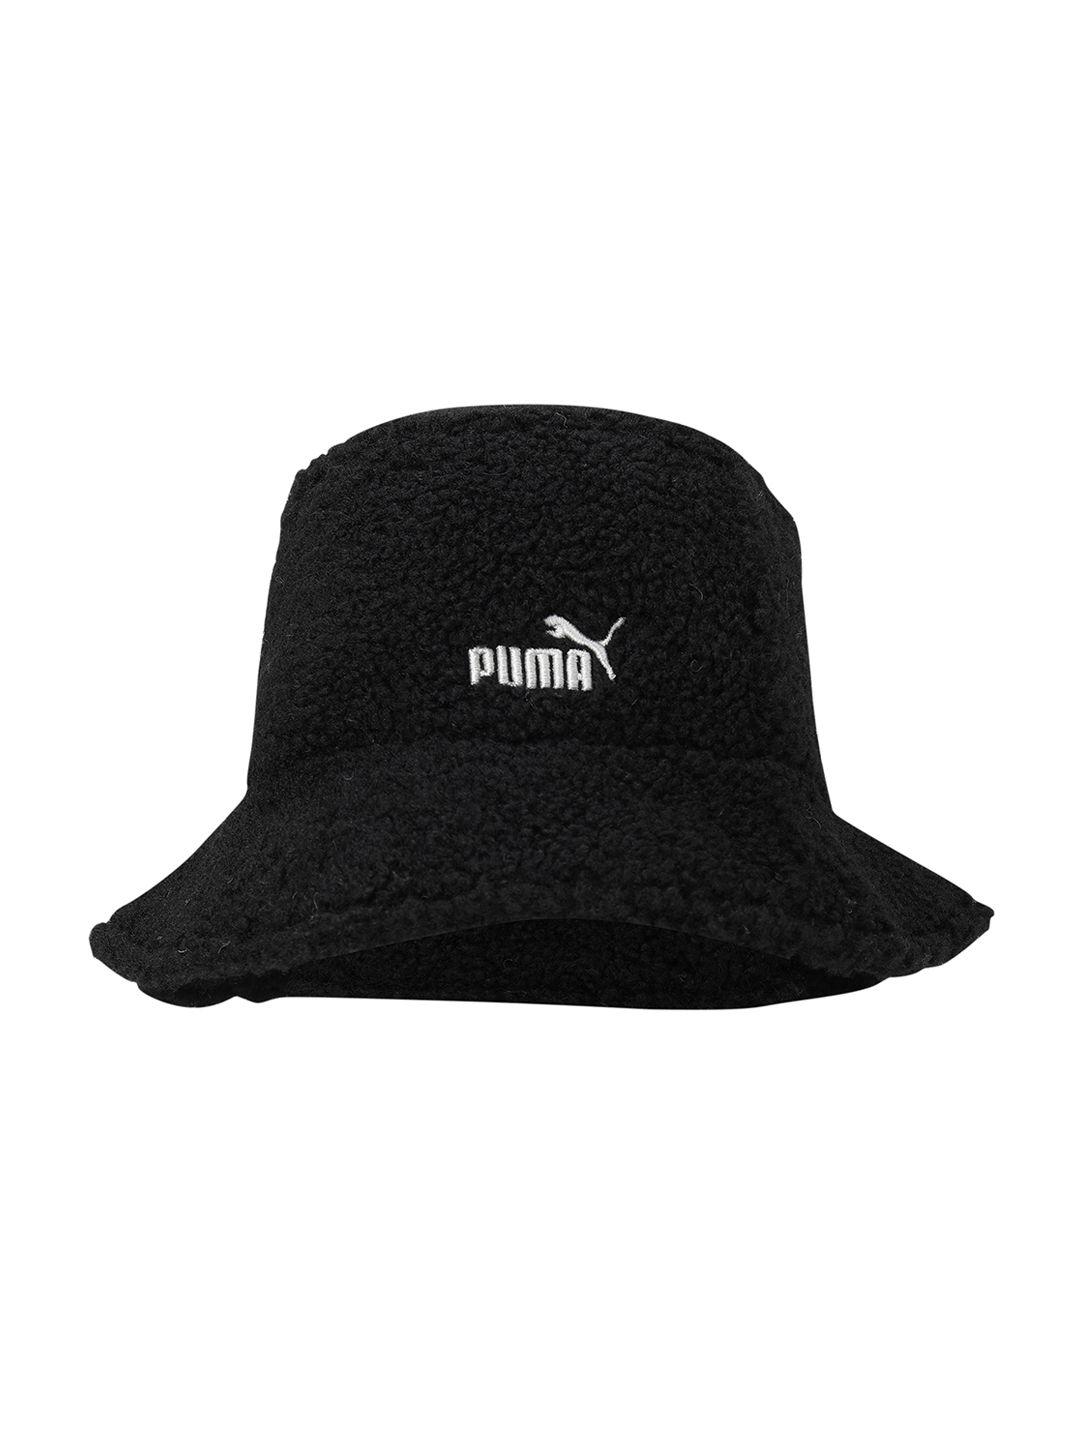 puma unisex black solid core winter bucket hat